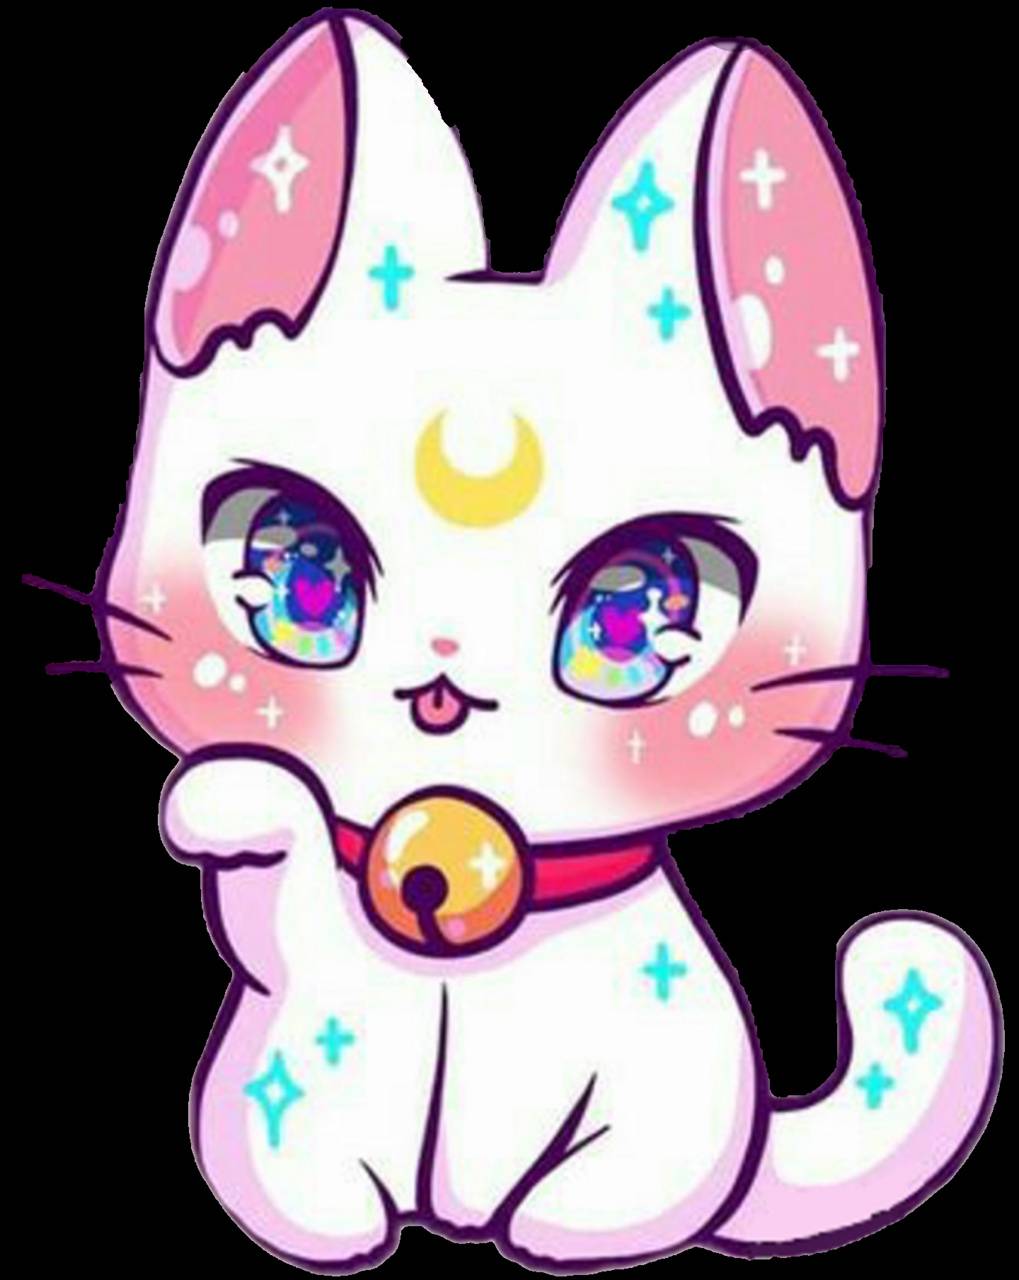 Cute Cartoon Kitty Images ~ Cute Cartoon Baby Cat Meow Cat Lover Poster ...